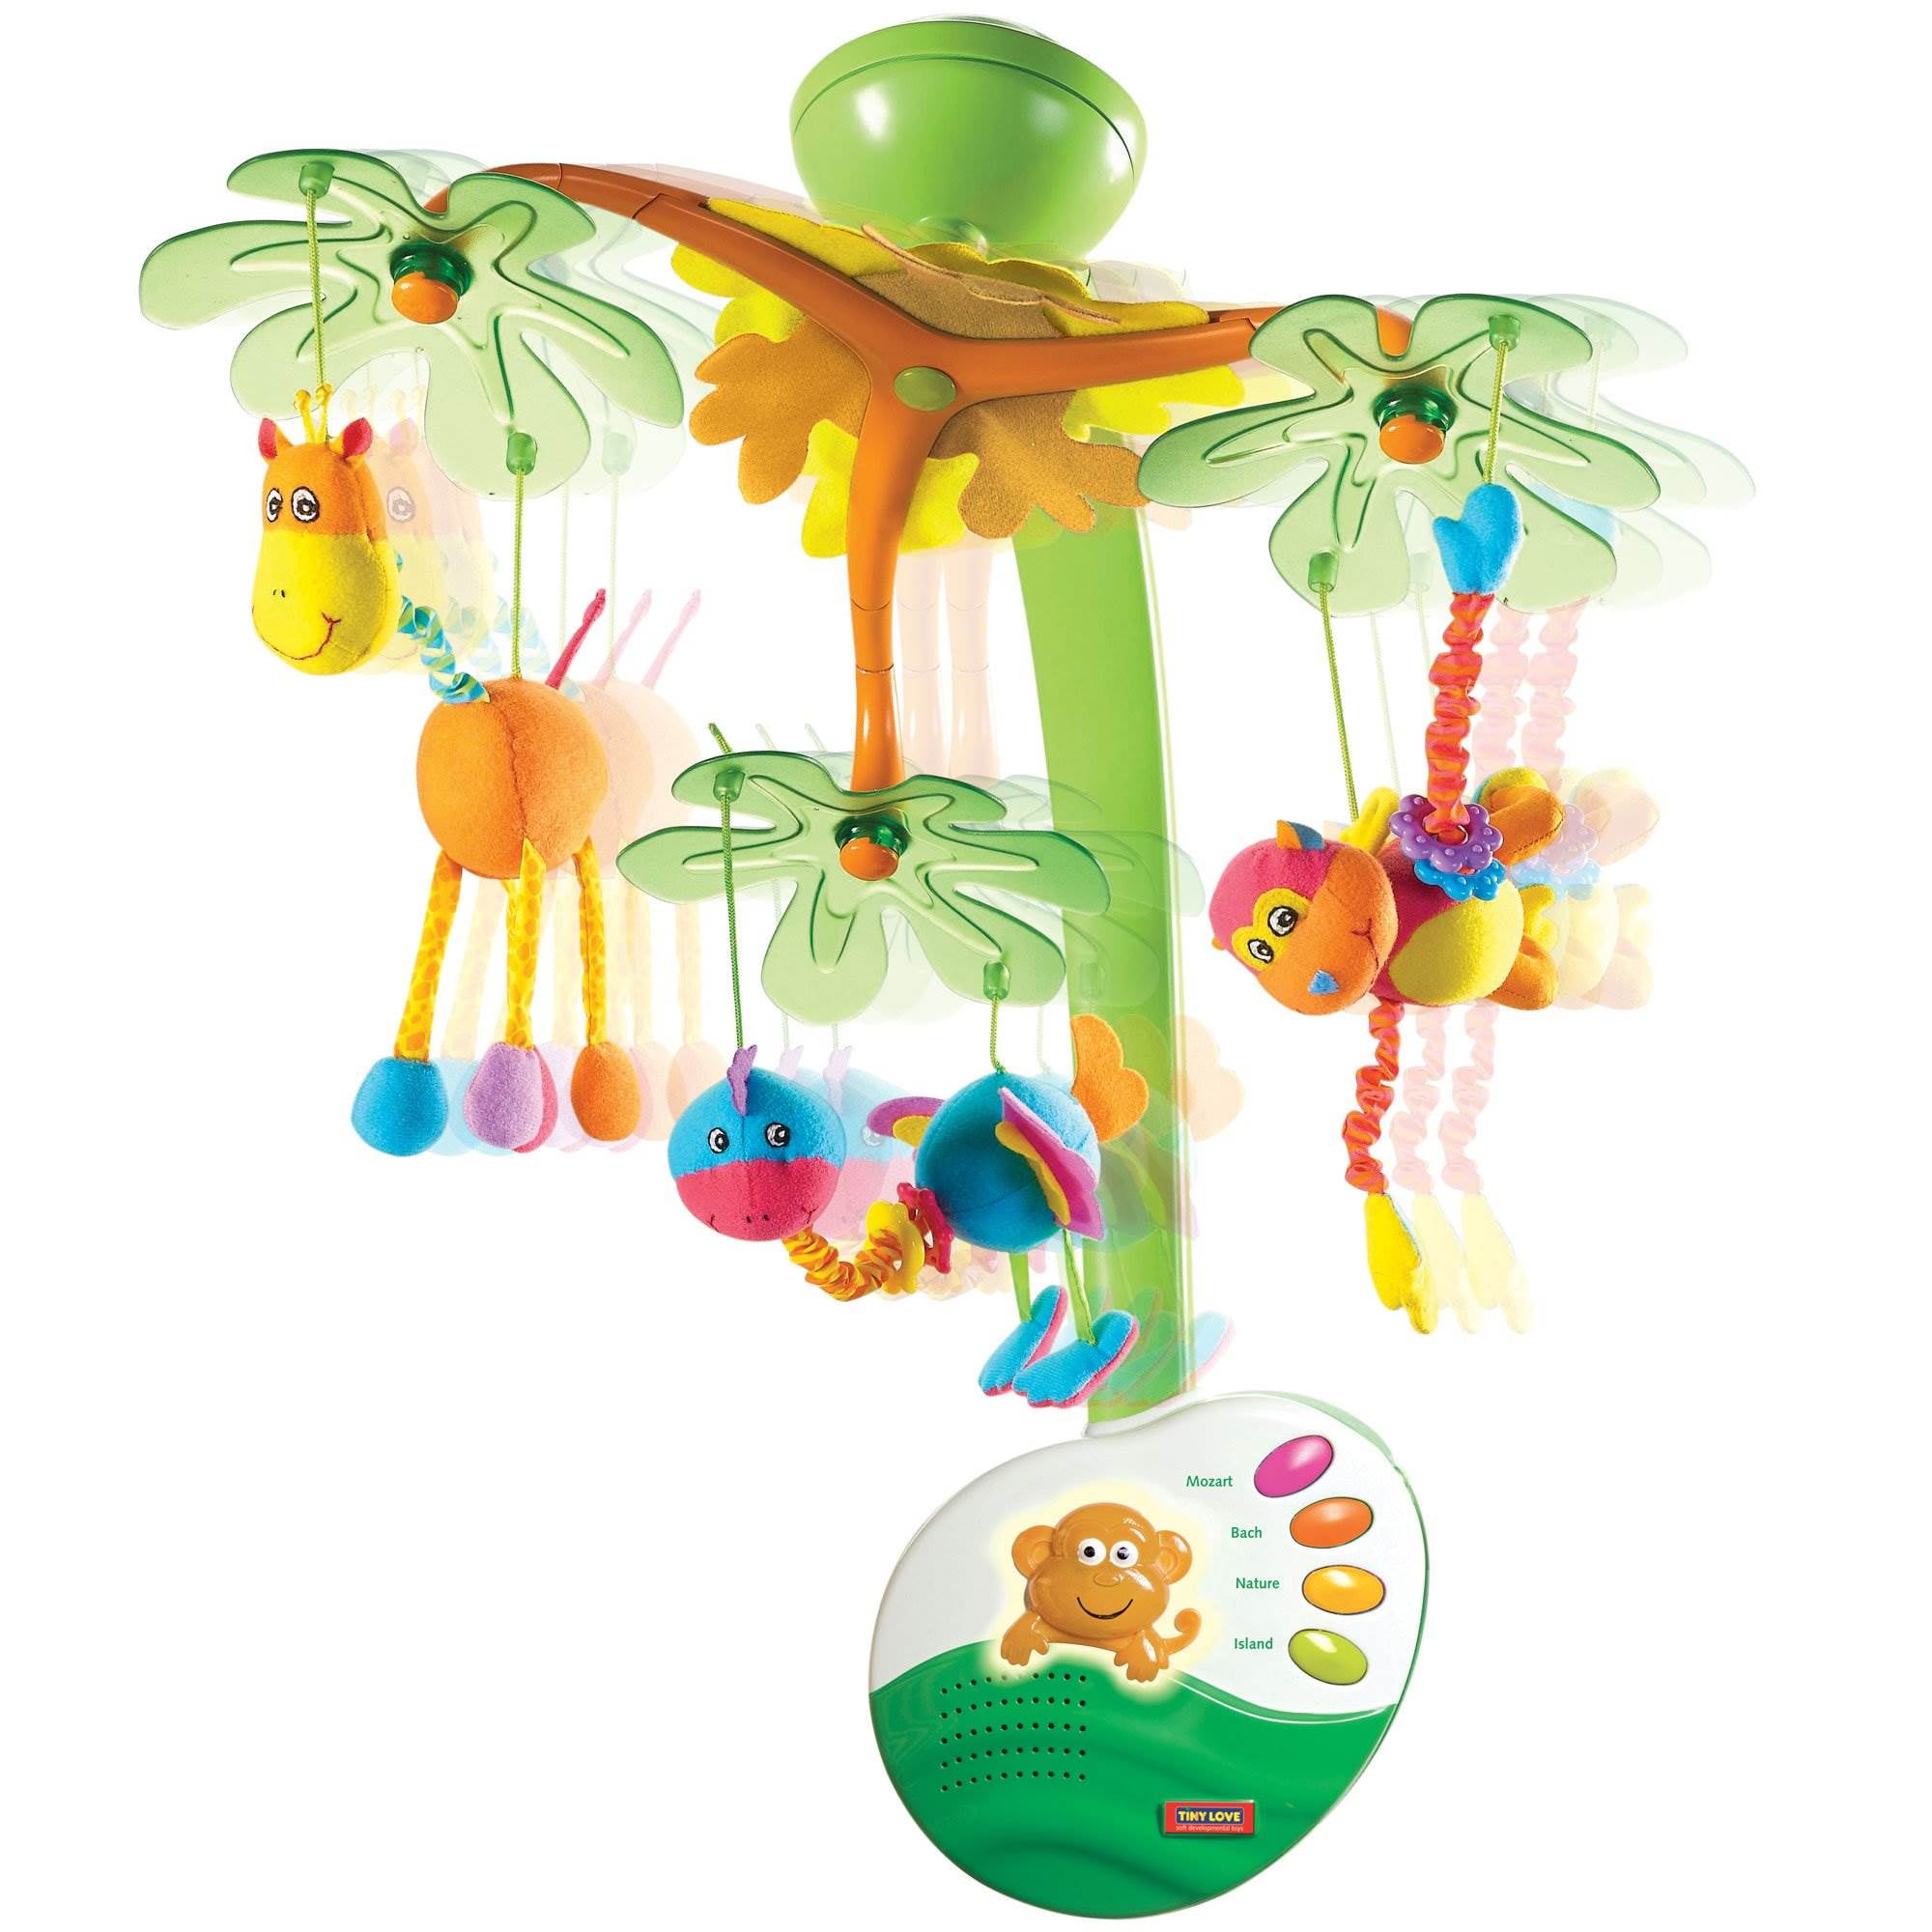 Tiny Love Sweet Island Dreams Baby Mobile Toy for Crib w/ Music & Lights - Walmart.com - Walmart.com